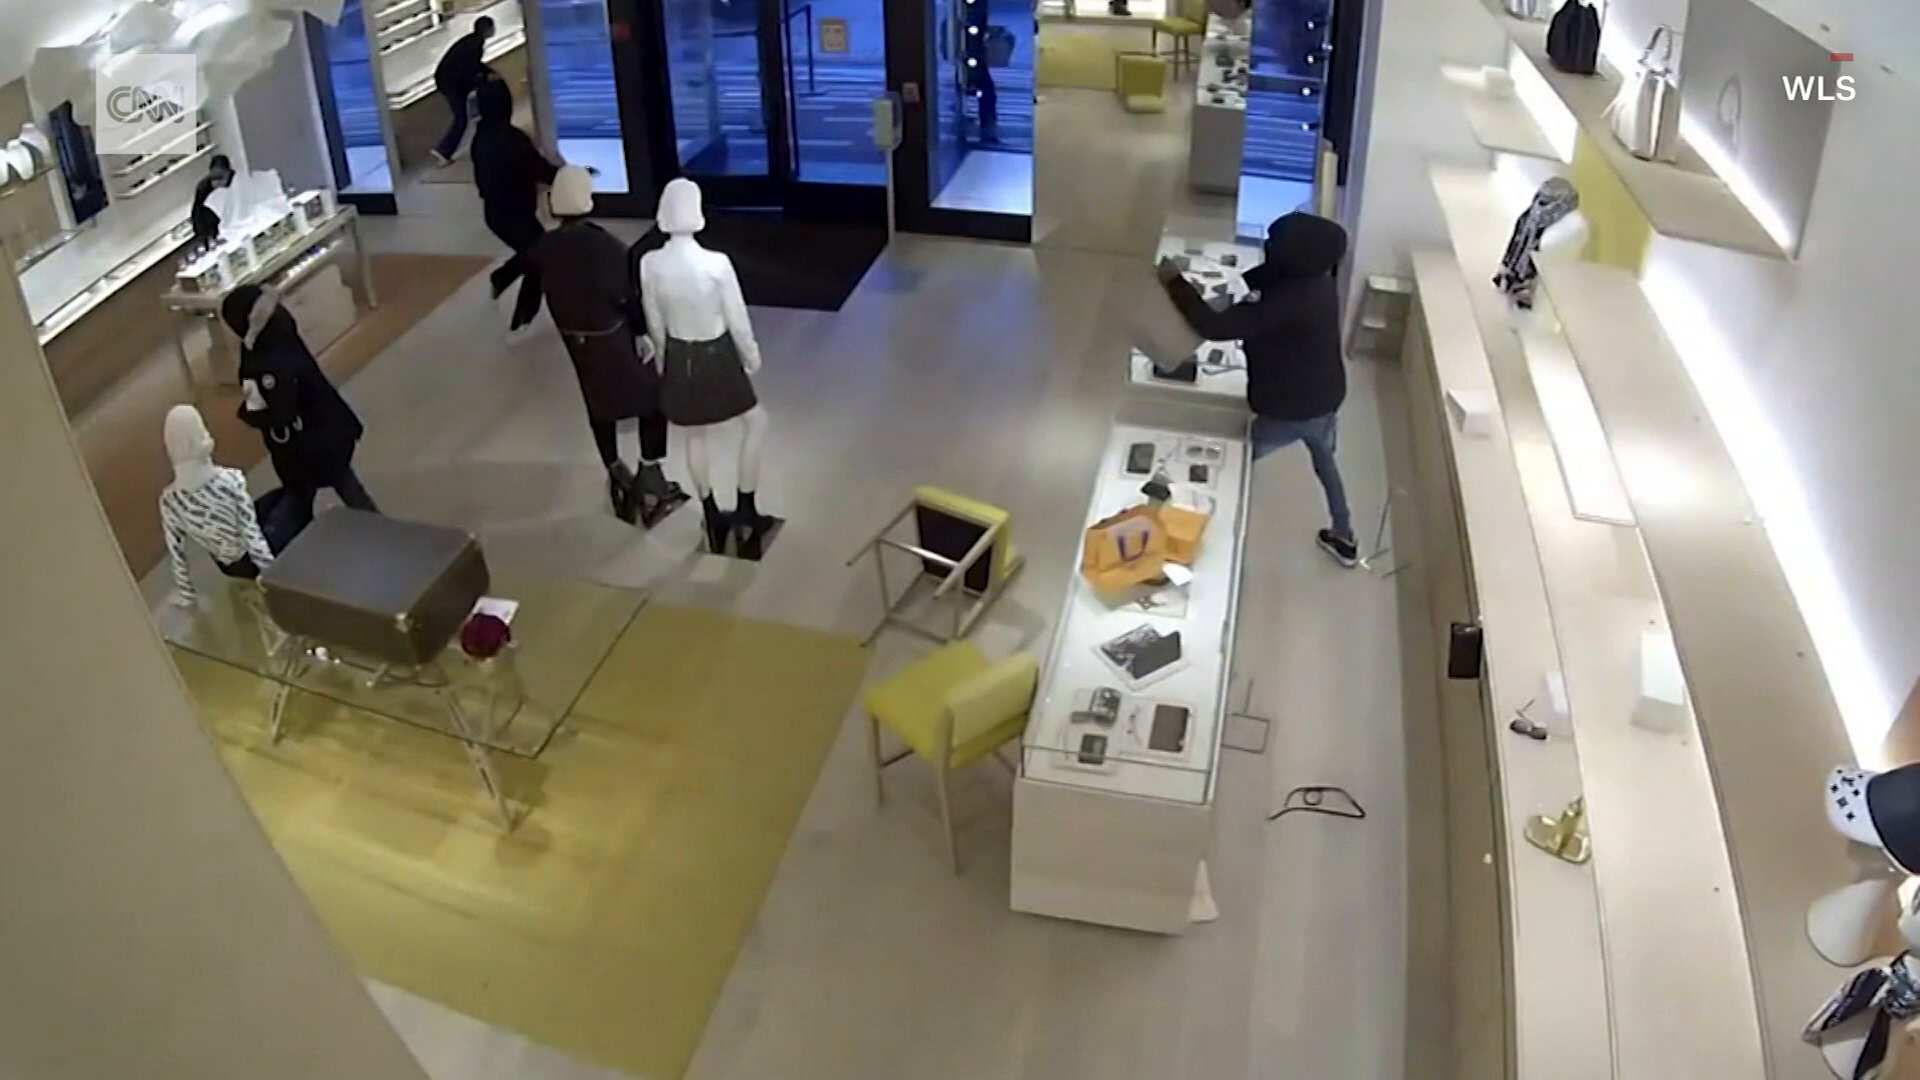 Oak Brook Police release photos of Louis Vuitton heist